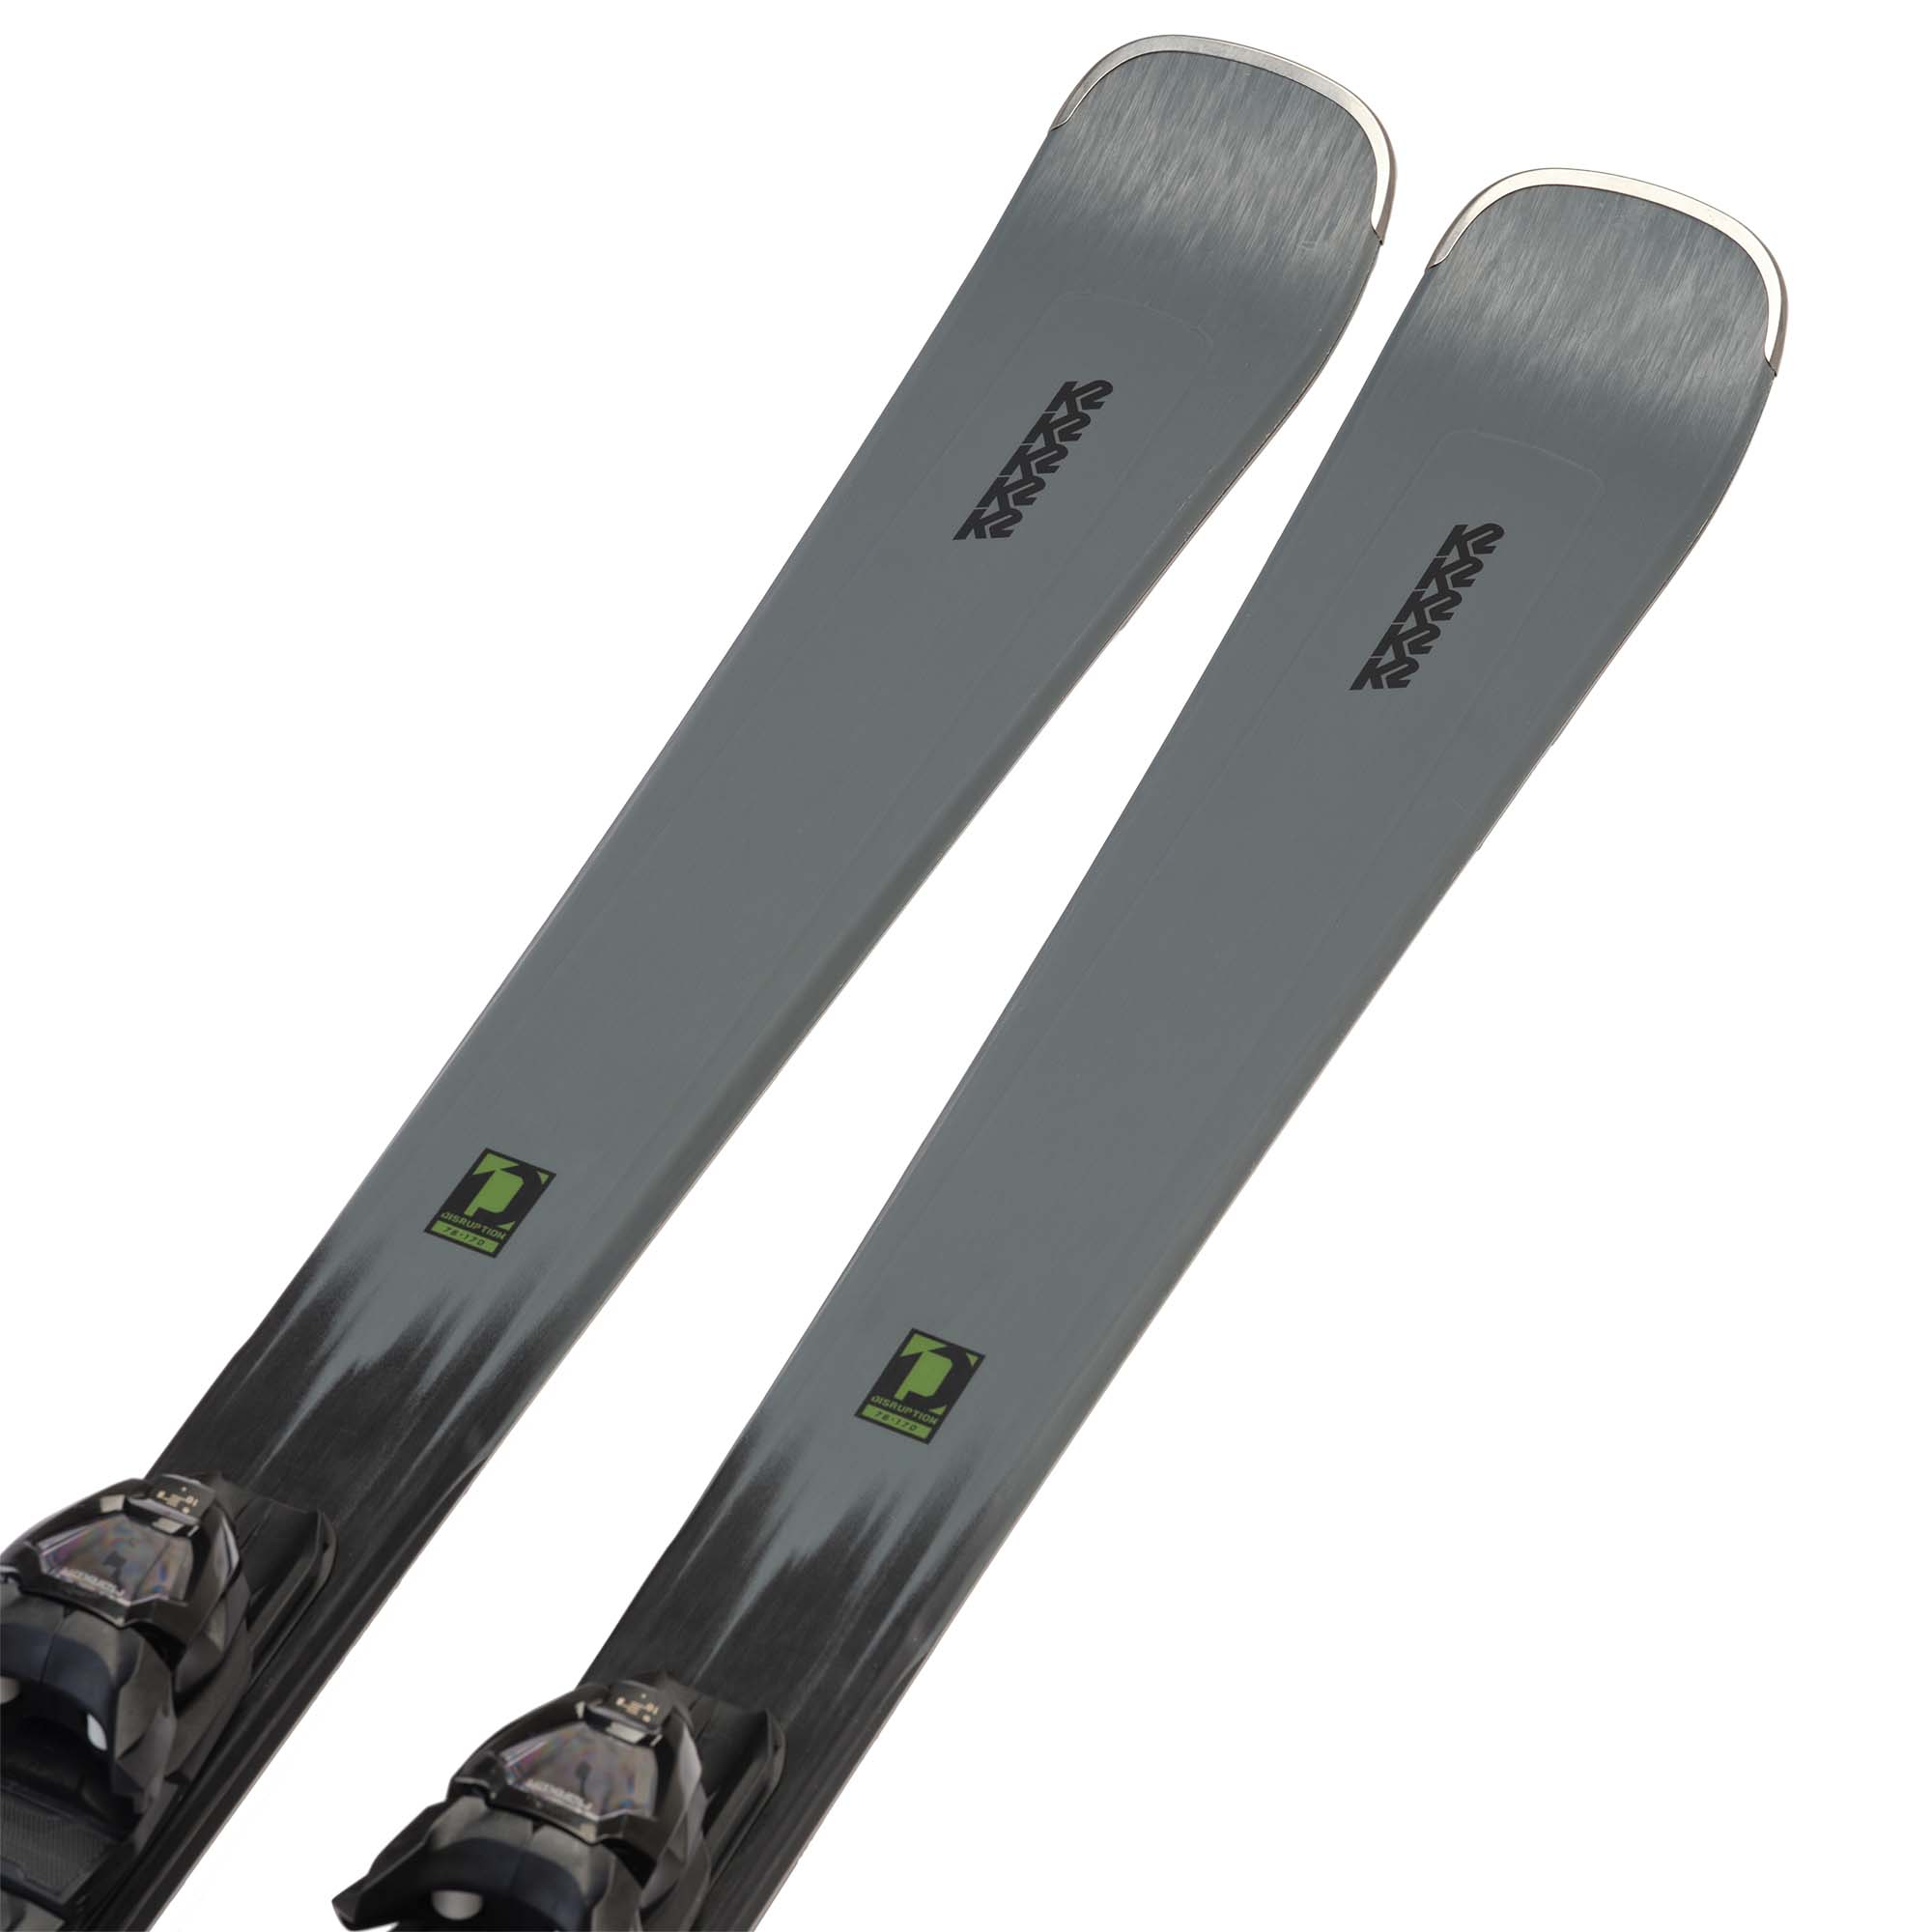 K2 Disruption 76 + M2 10 Quikclik Skis